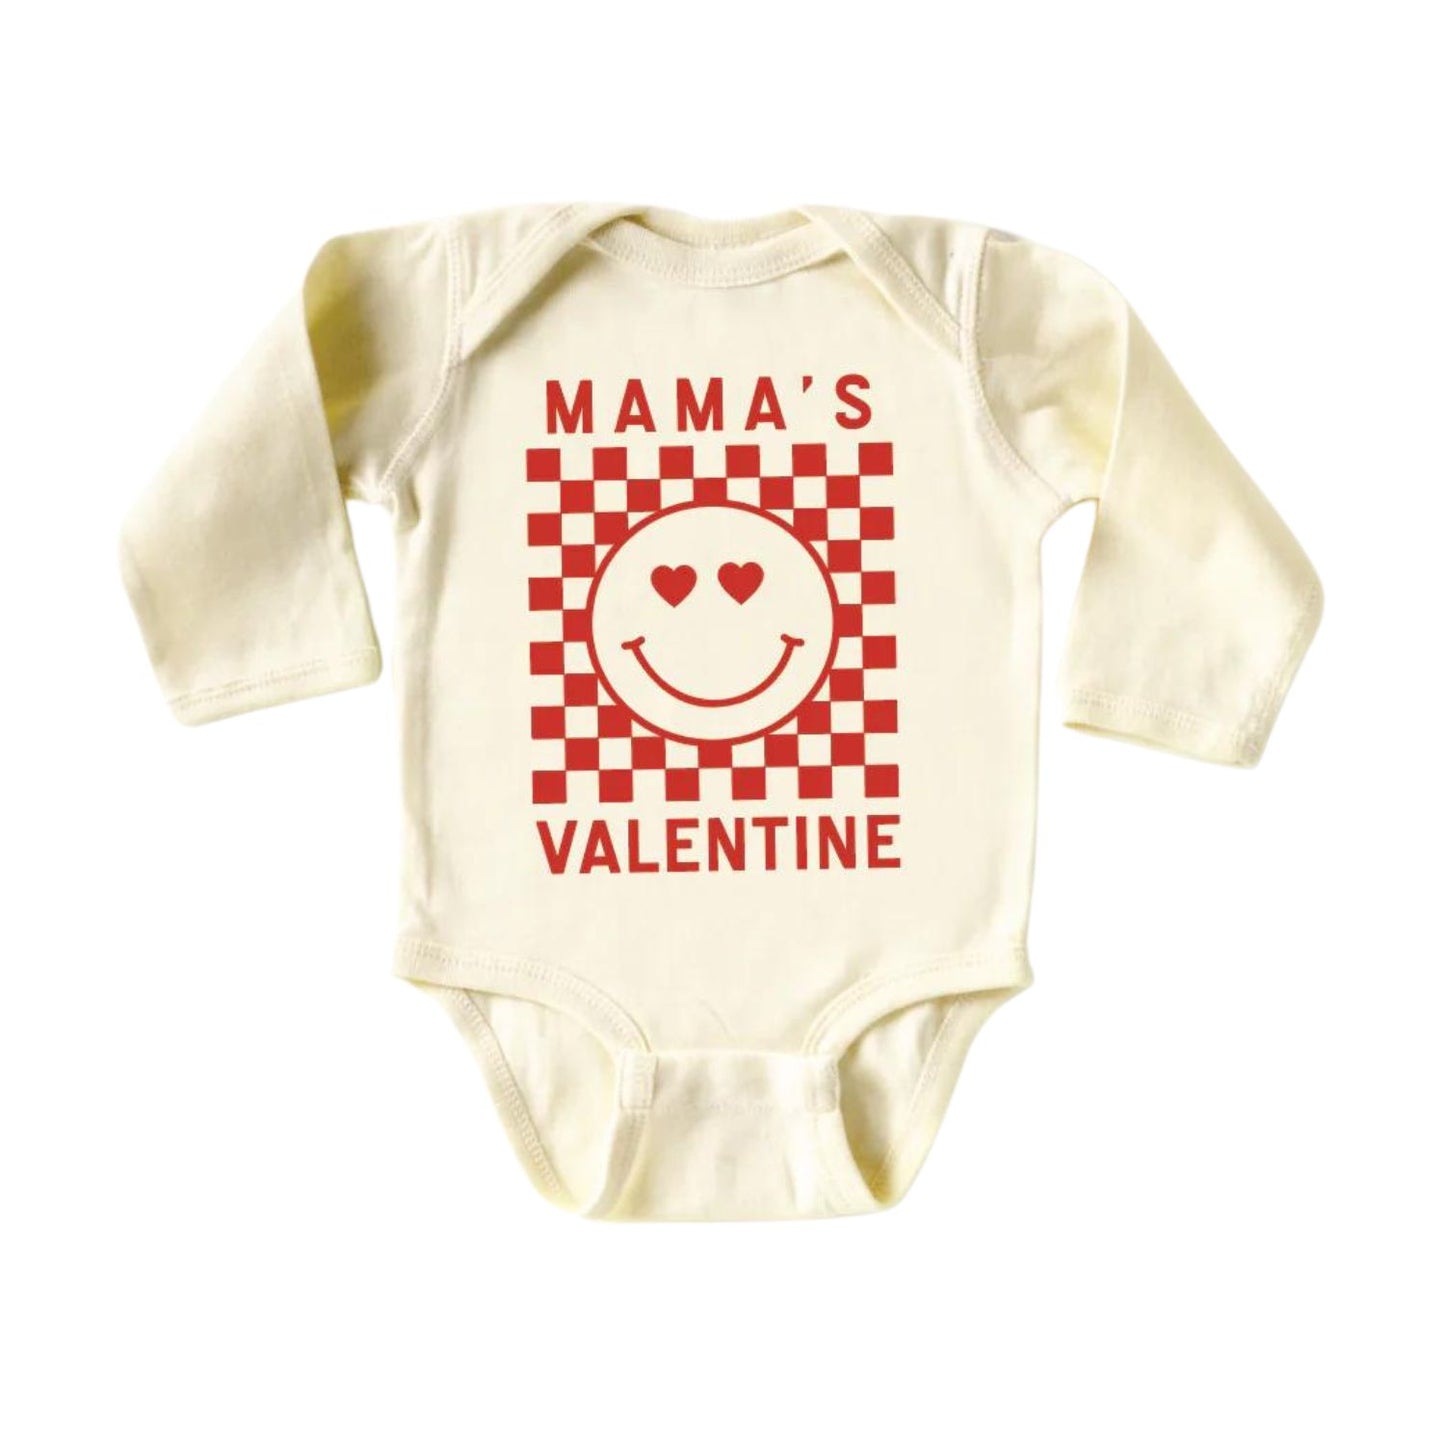 Checkered Long Sleeved Onesie - Mama's Valentine - Natural - SBGC